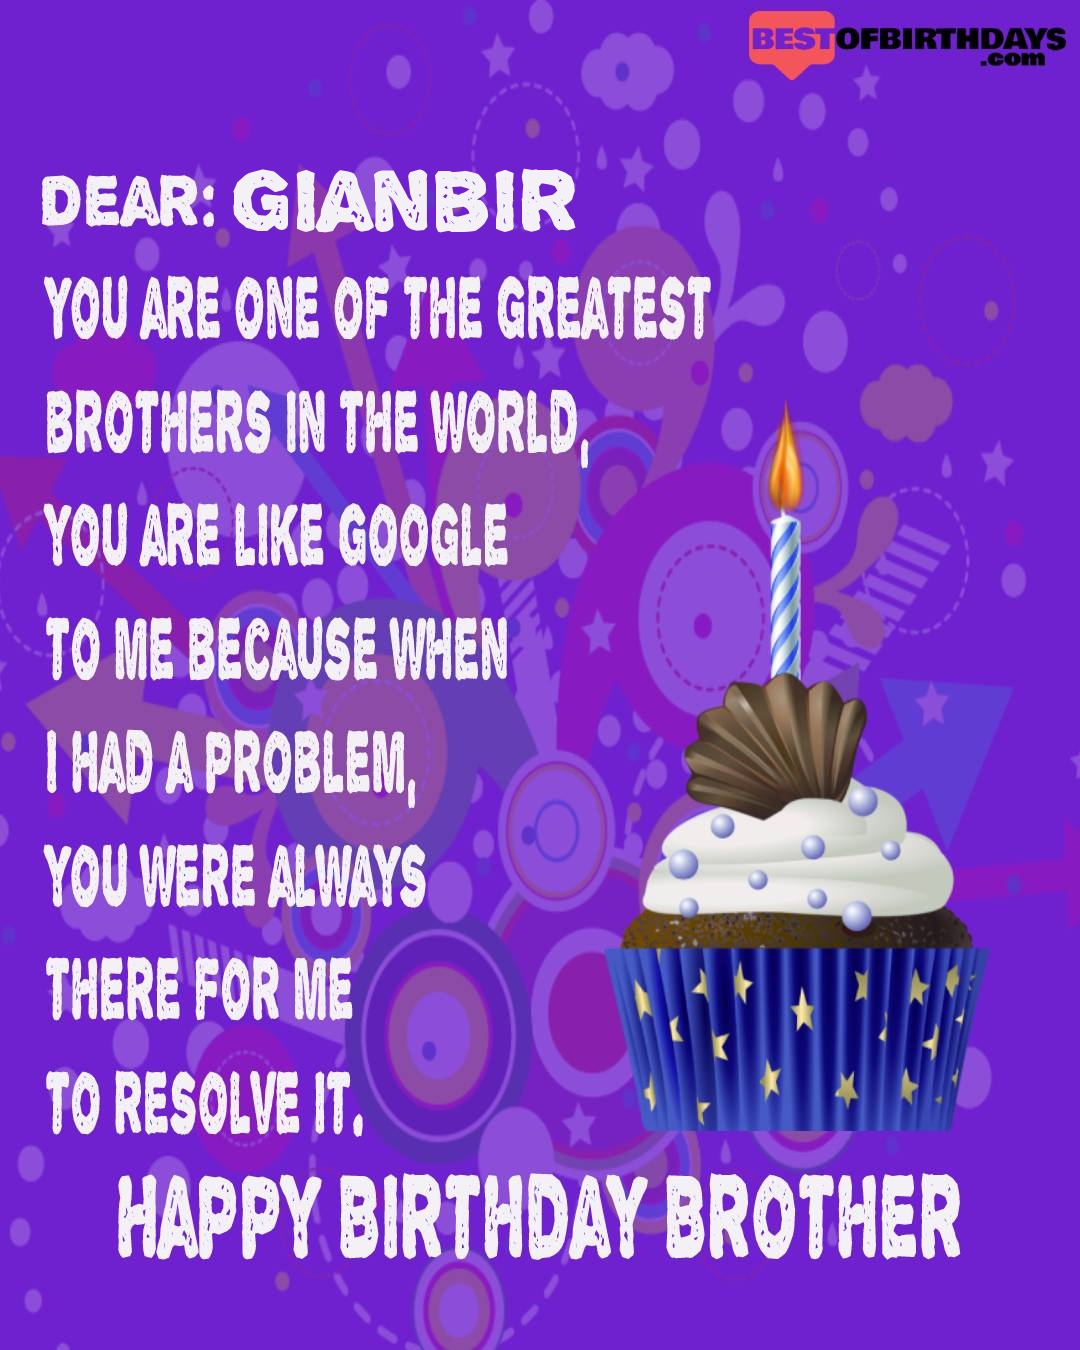 Happy birthday gianbir bhai brother bro